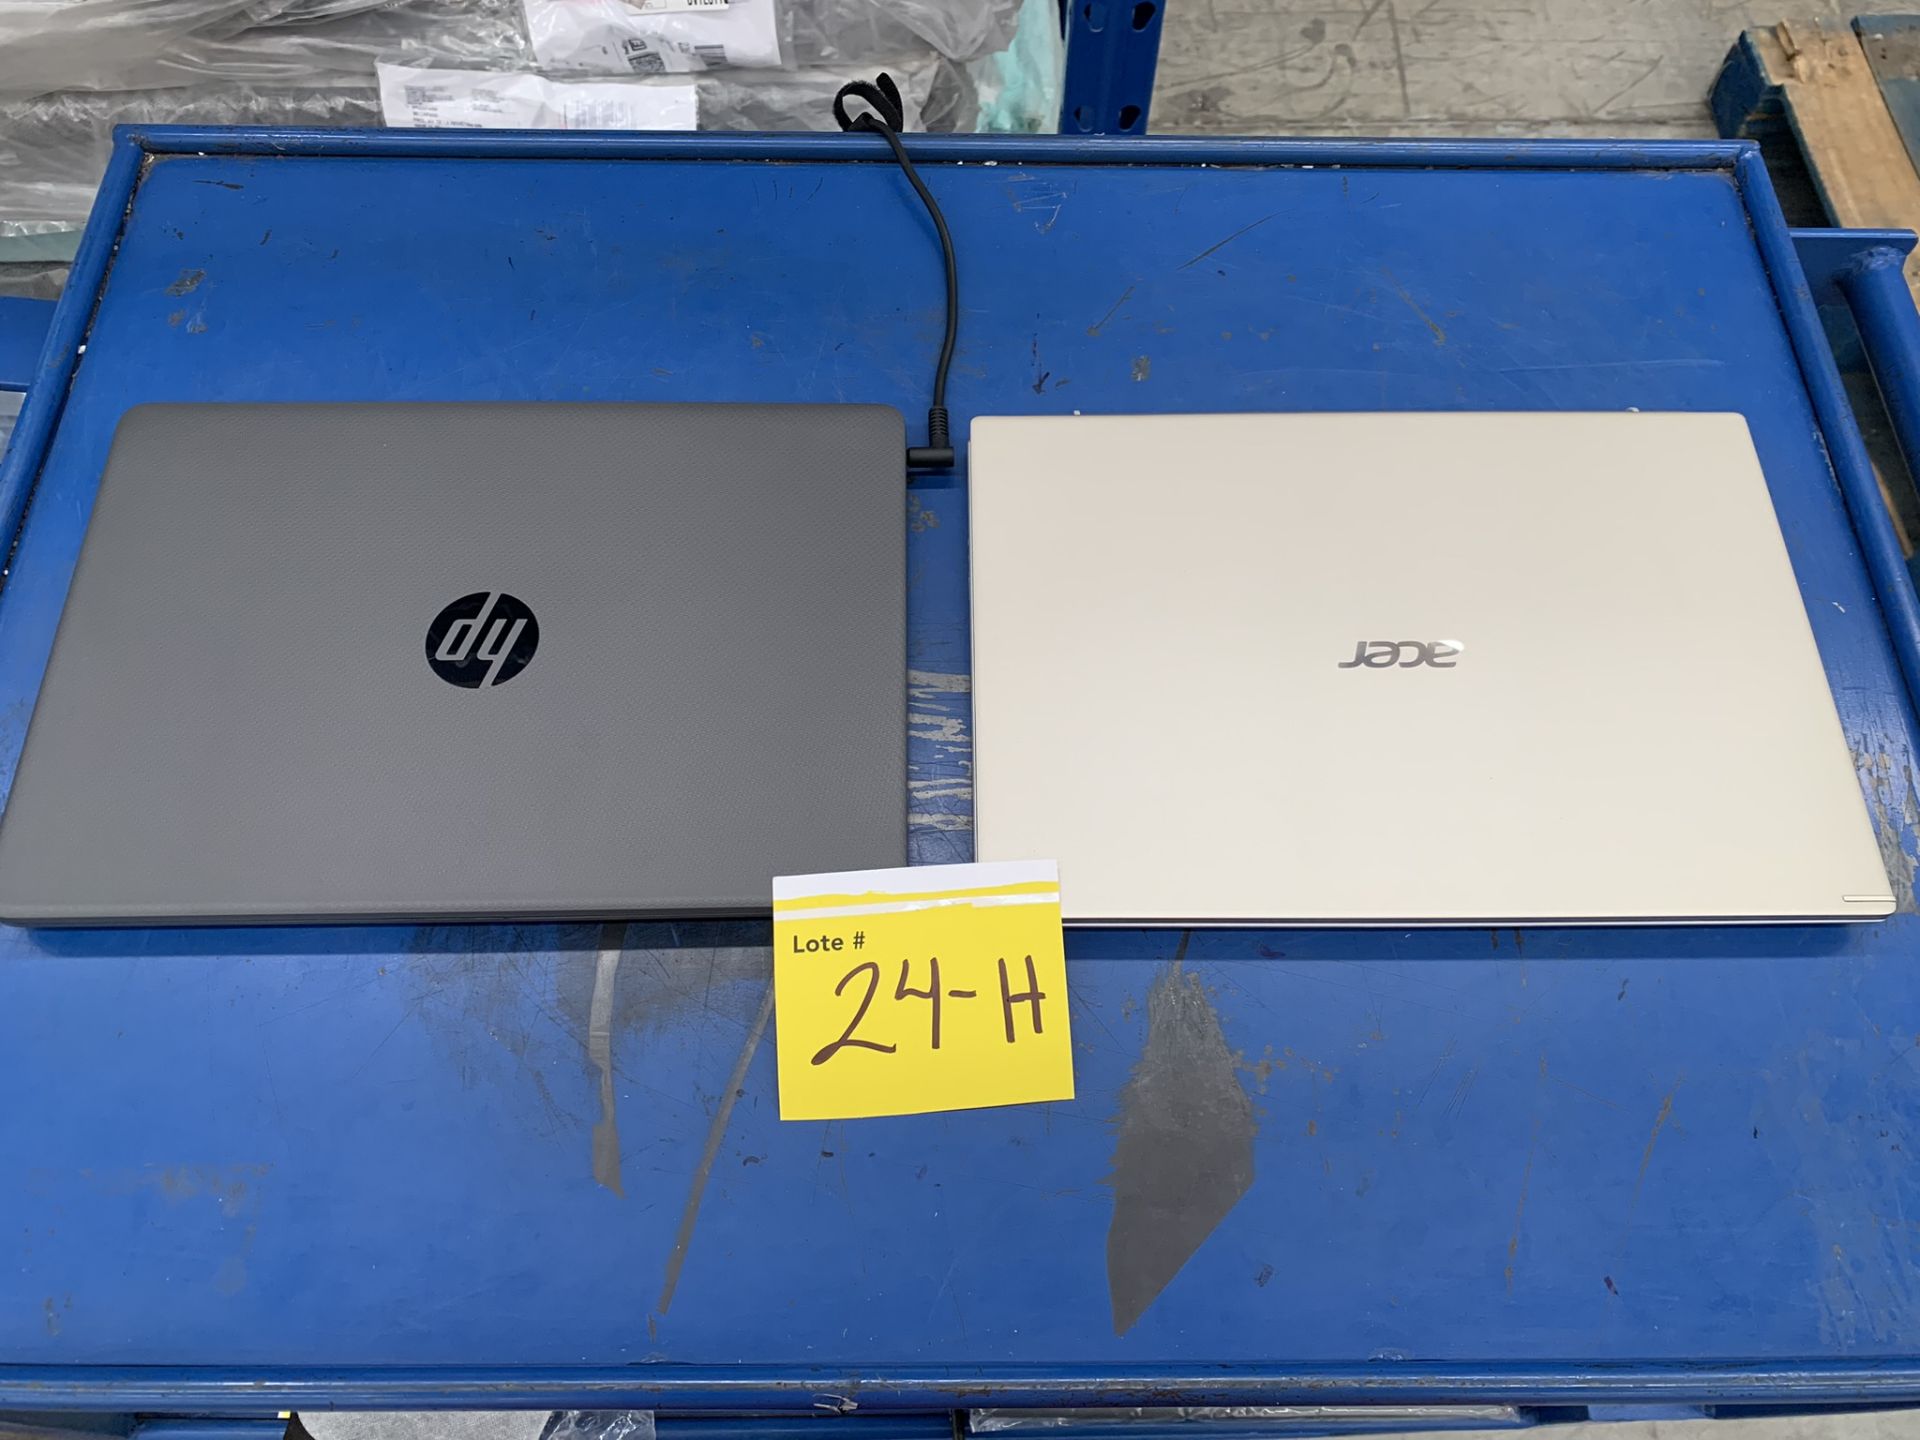 Lote De 3 Laptops Contiene: 1 Laptop Marca Acer Modelo Aspire 5 Serie 1022F3400 Color Gris So Windo - Image 7 of 18